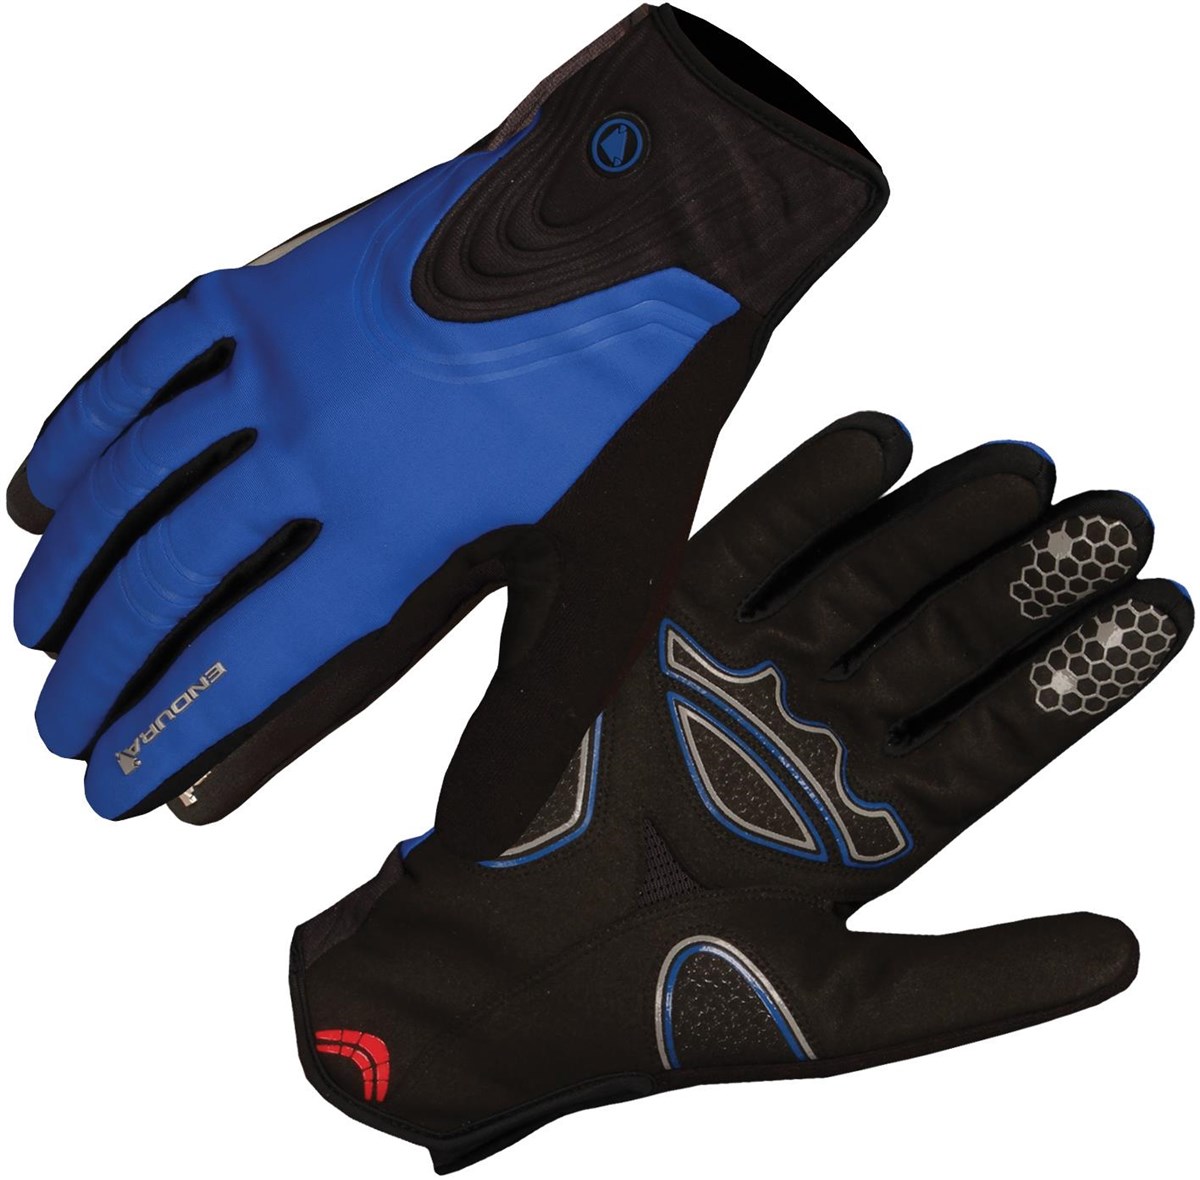 Endura Windchill Long Finger Cycling Gloves